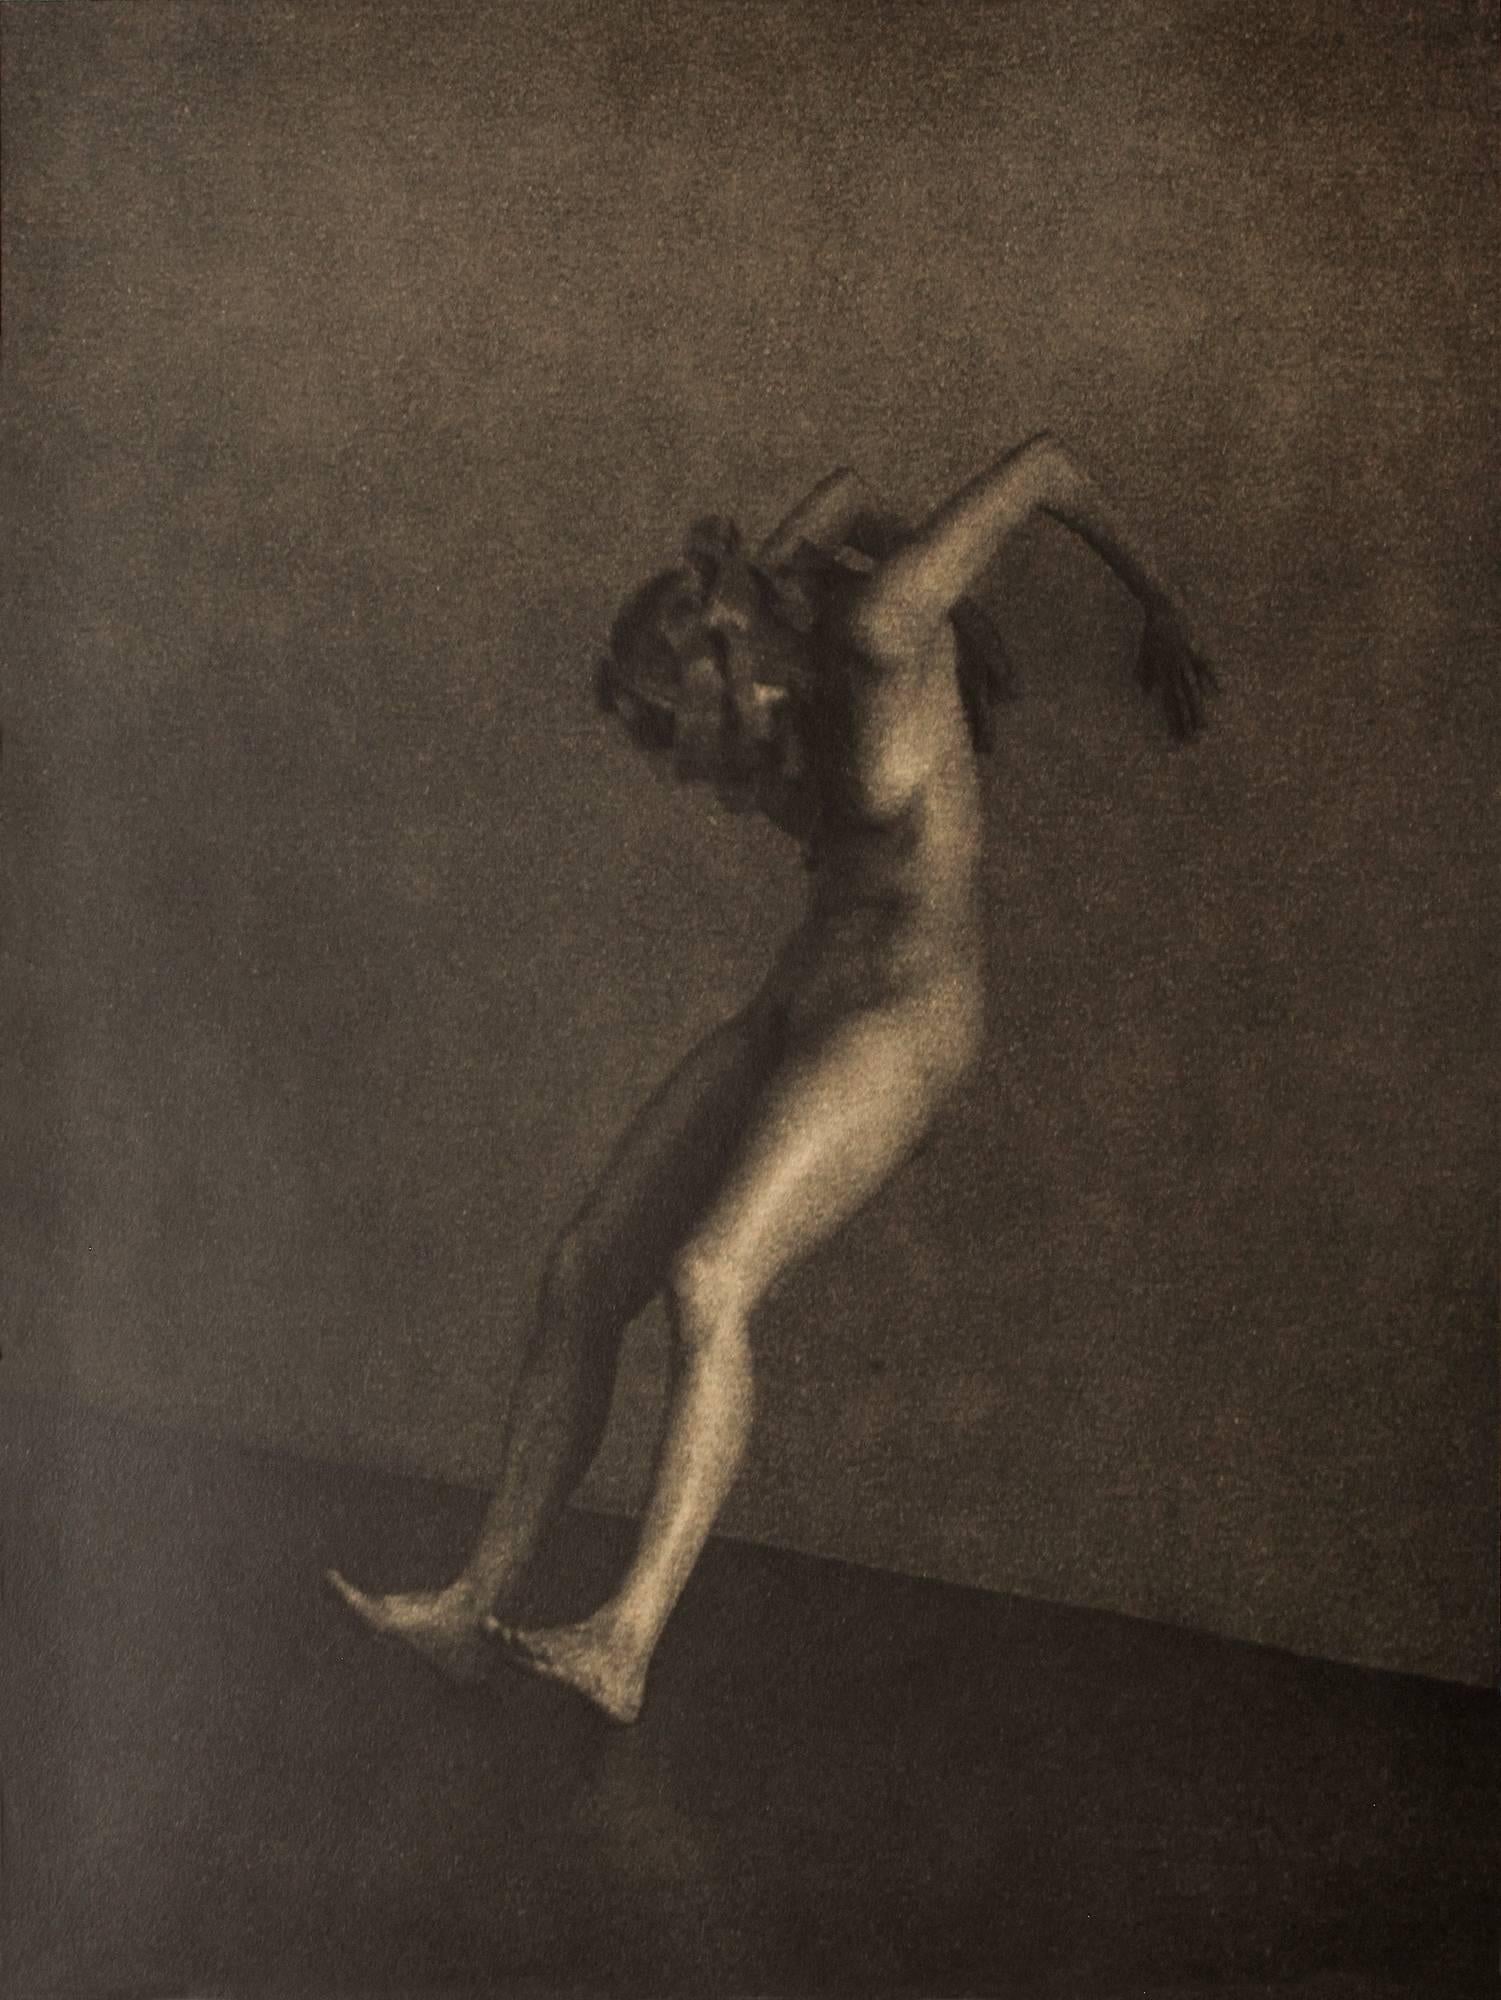 John Casado Nude Photograph - Untitled / 1006 (framed)